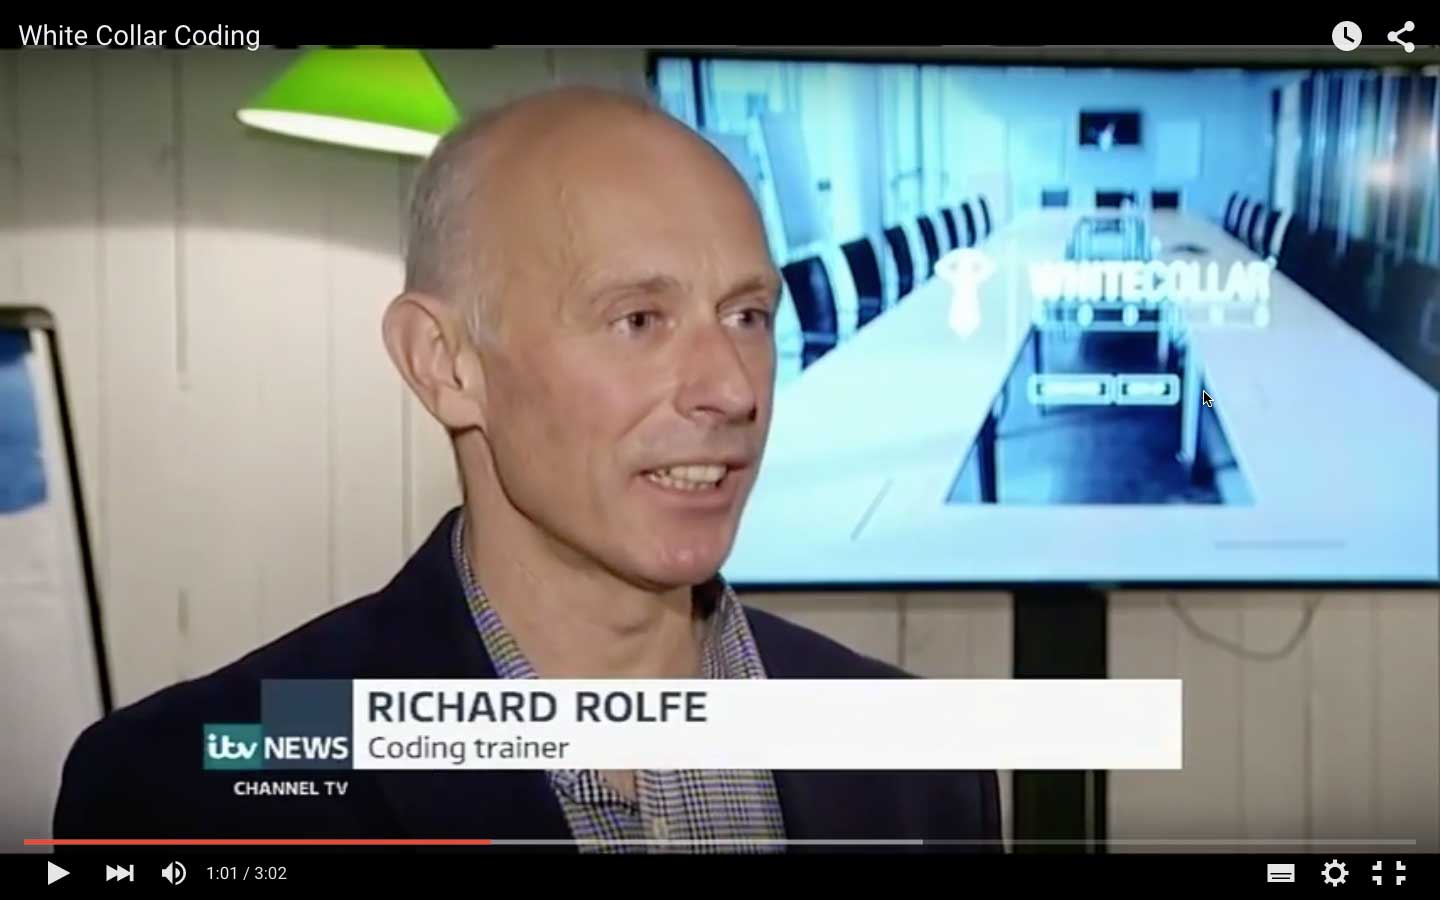 Richard Rolfe White Collar Coding TV